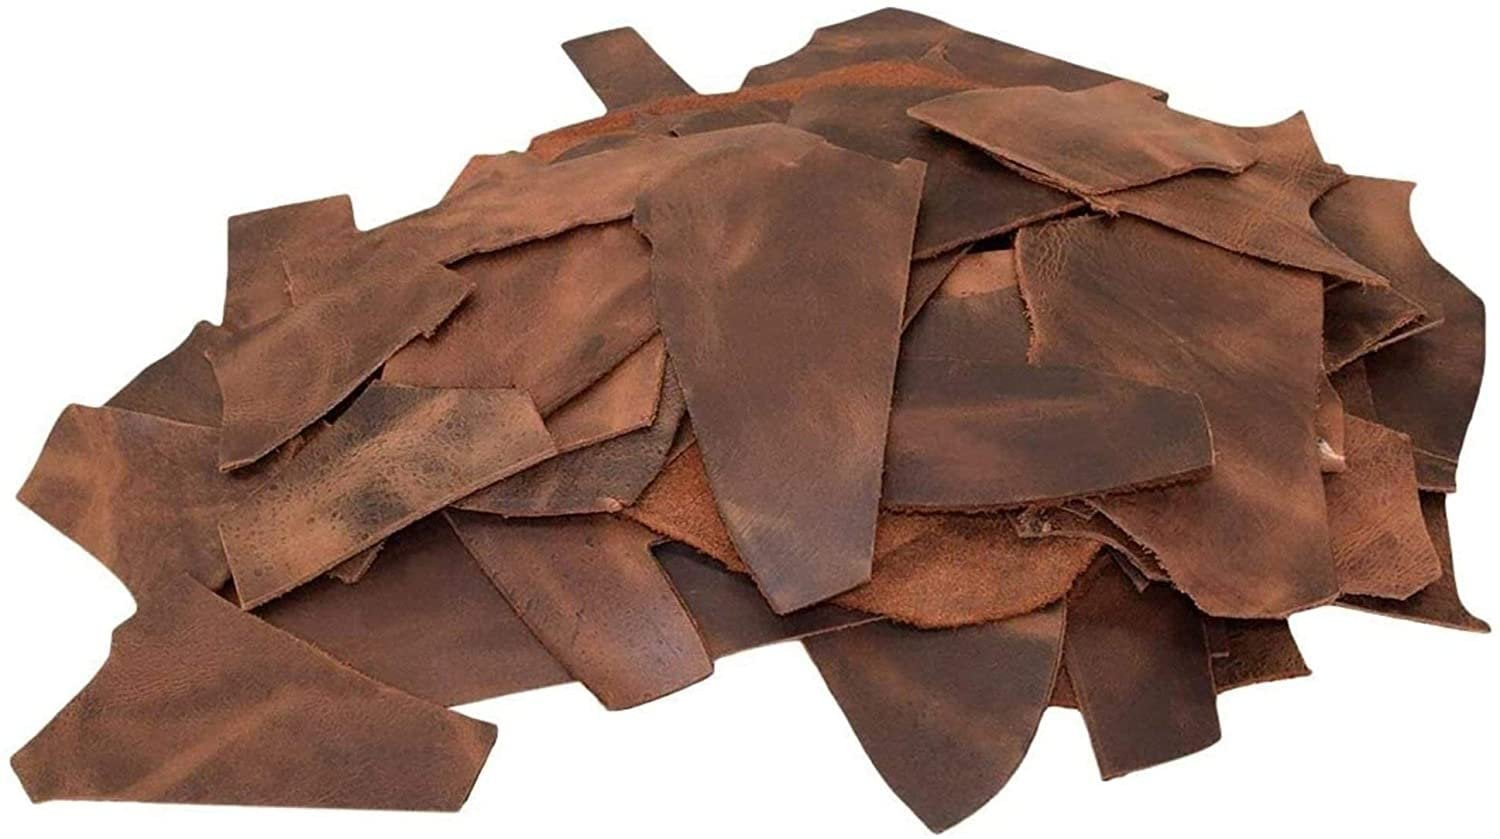 Saddle Brown Leather Pieces - 5 lb Bundle - 3 to 4 oz Cowhide Leather Scraps